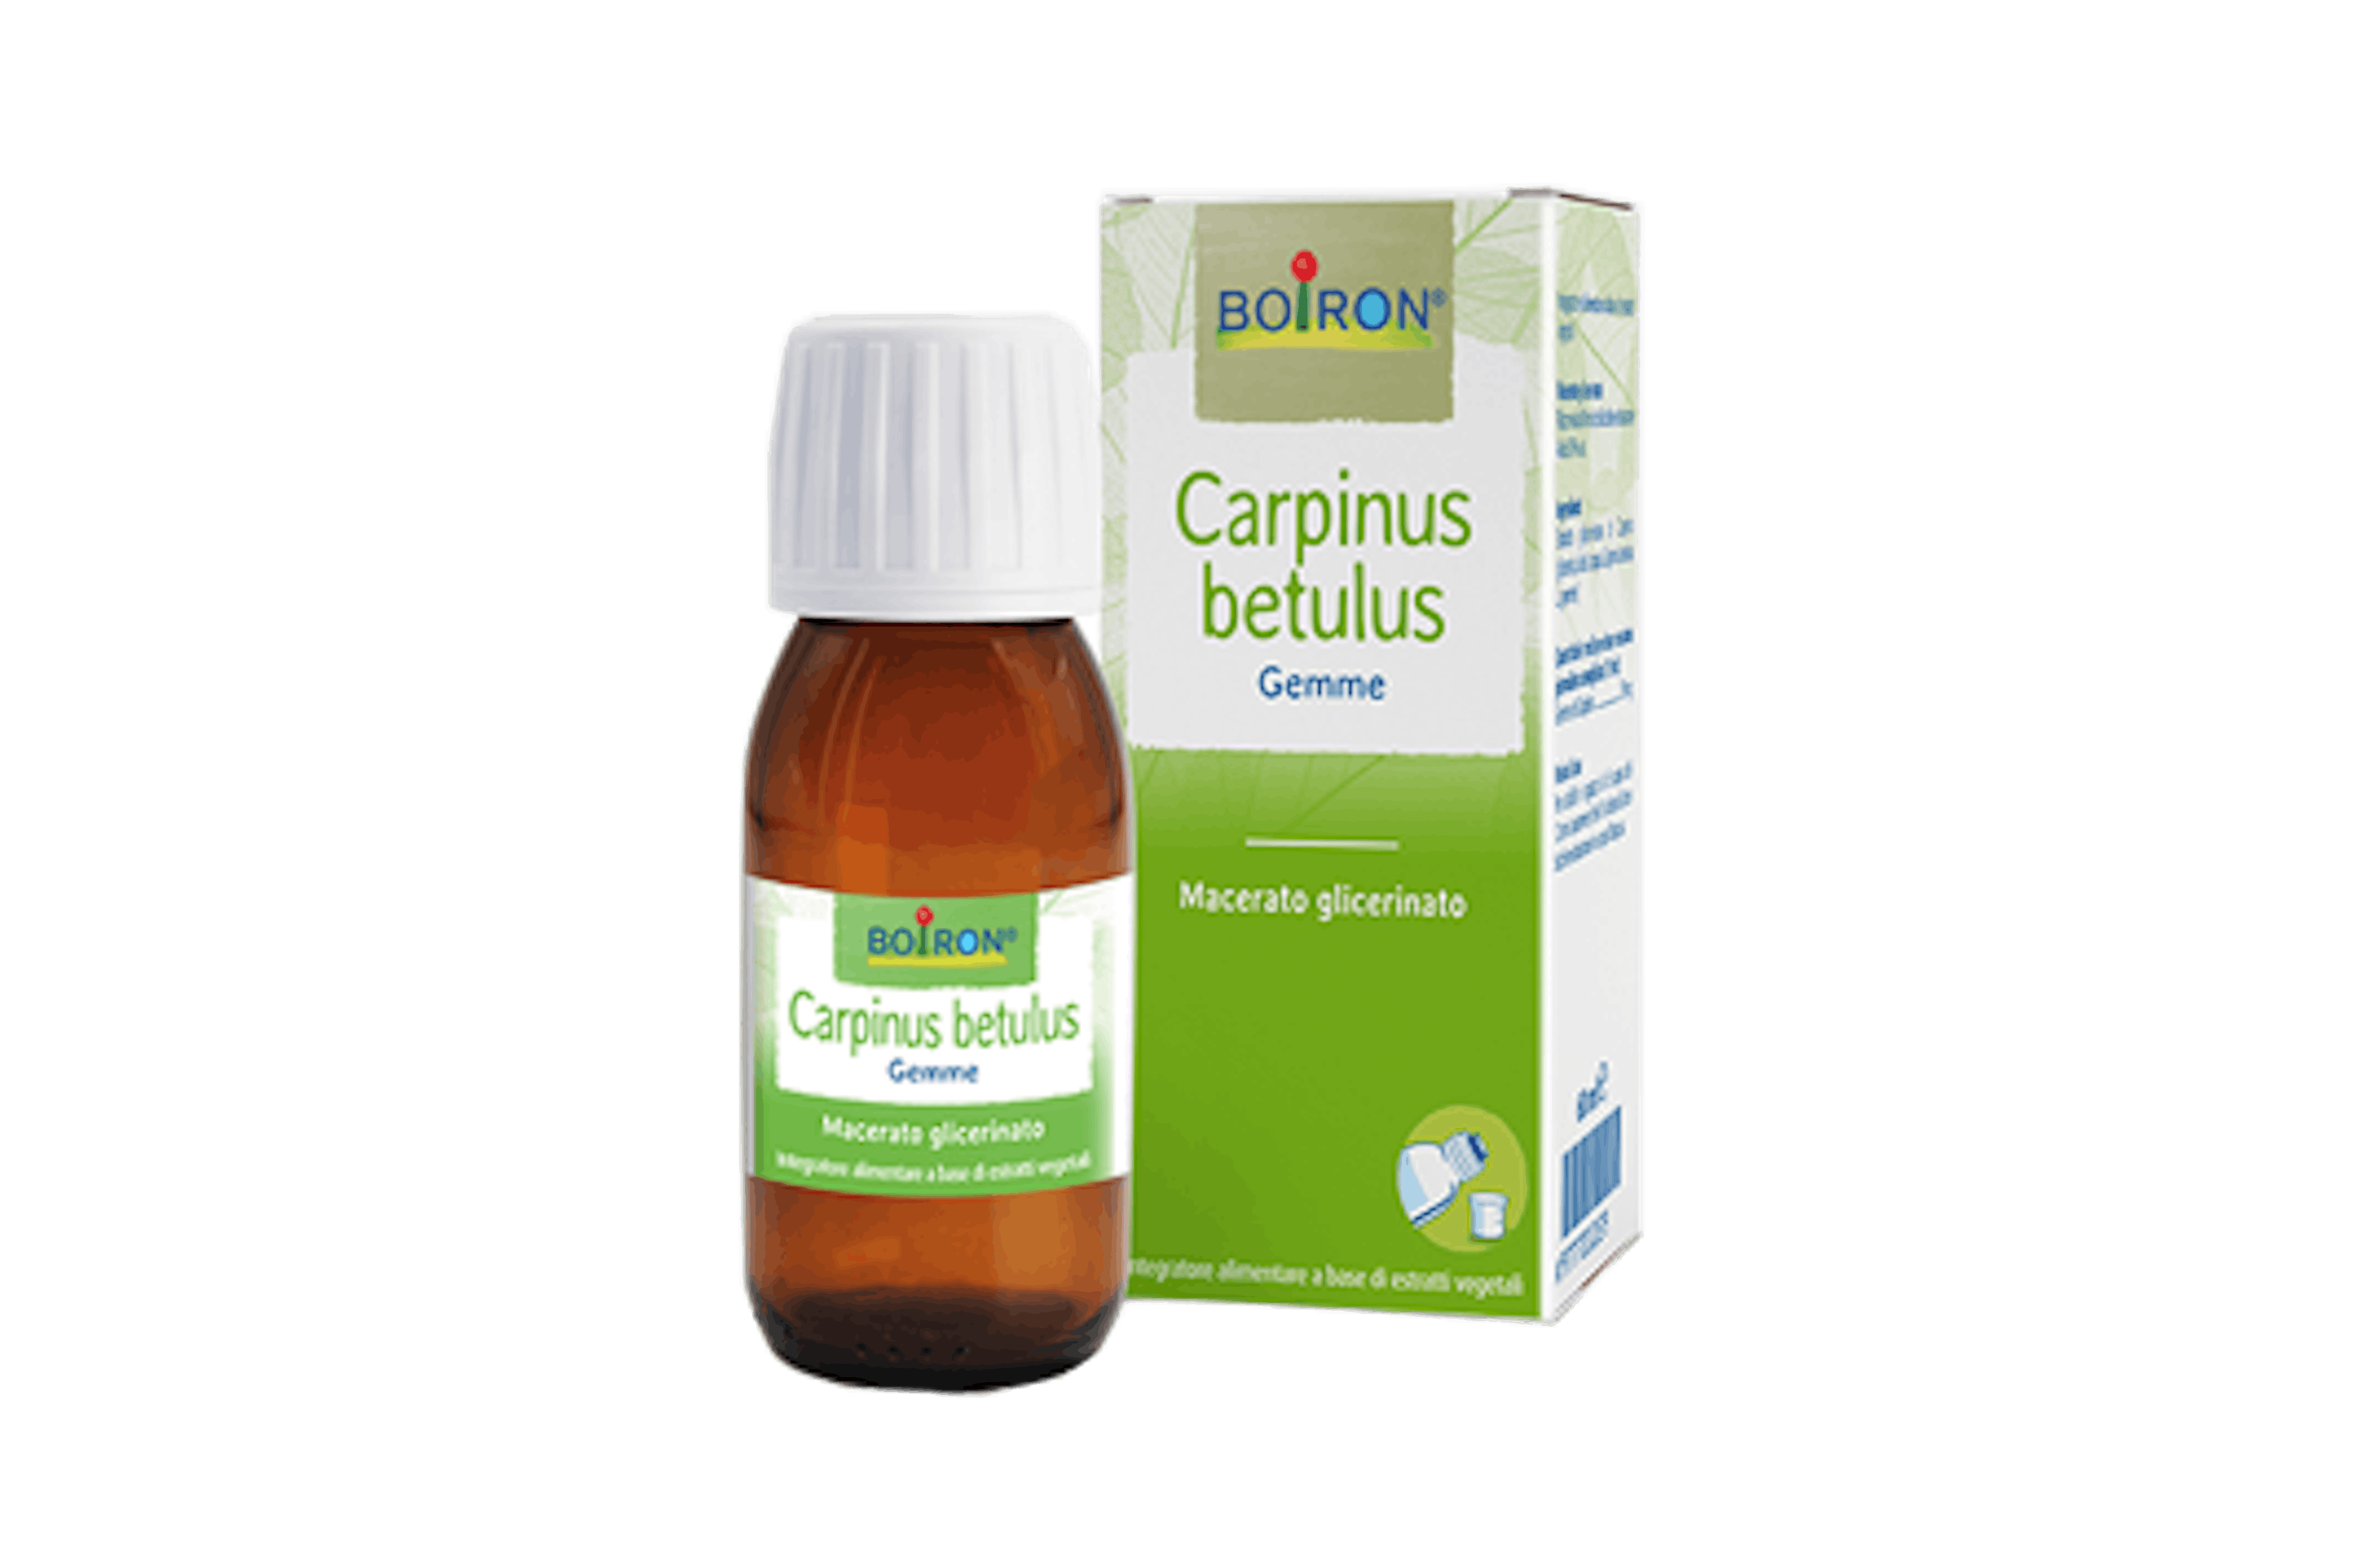 Carpinus betulus Gemme flacone da 60 ml con bicchiere dosatore.